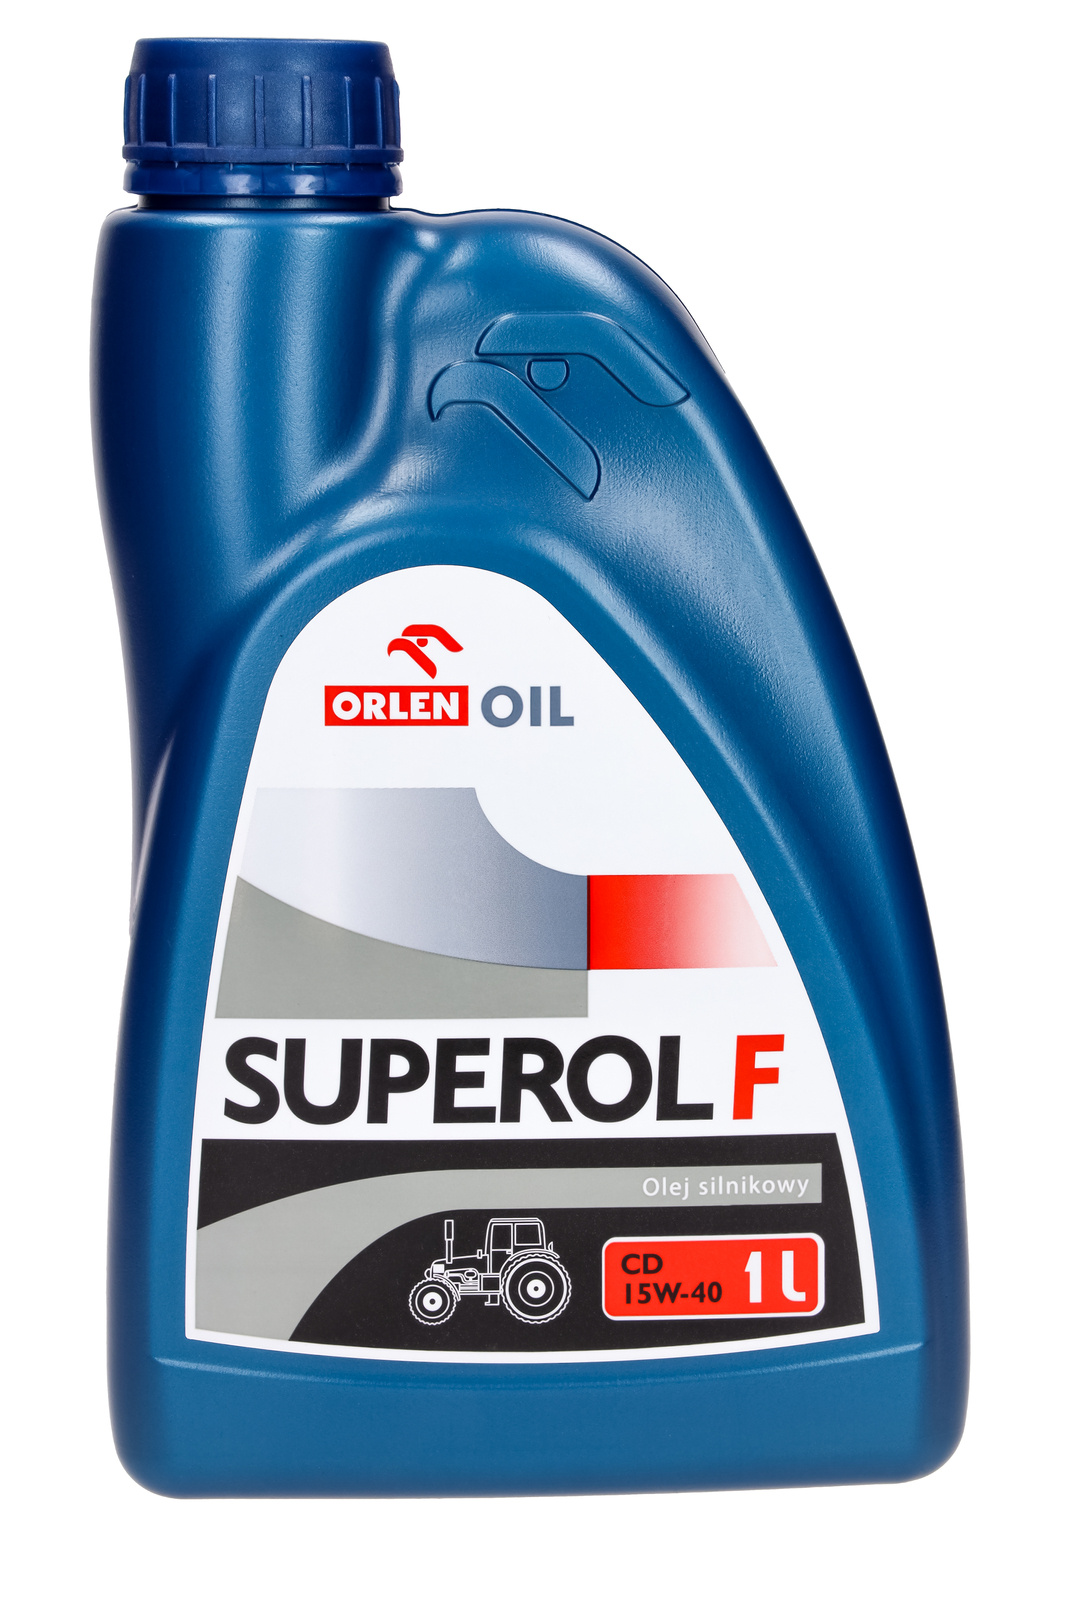 Моторное масло Orlen Superol F CD 15W-40 1л.